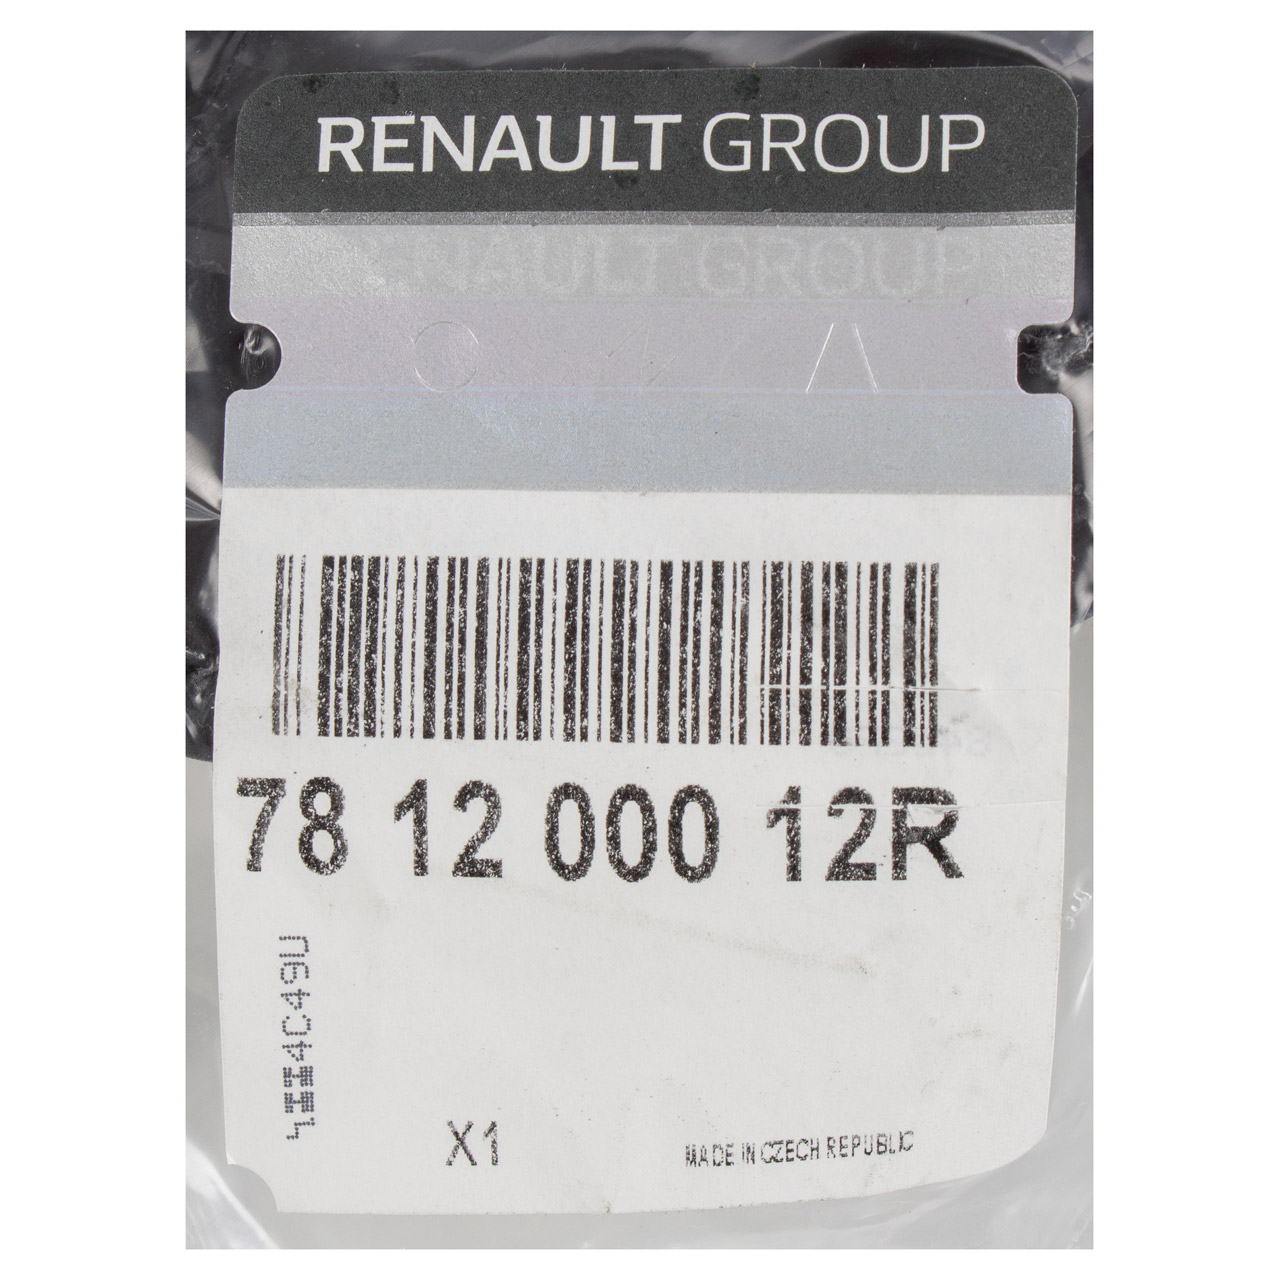 ORIGINAL Renault Verschluss Kraftstofftank Tankklappe Scenic 3 781200012R